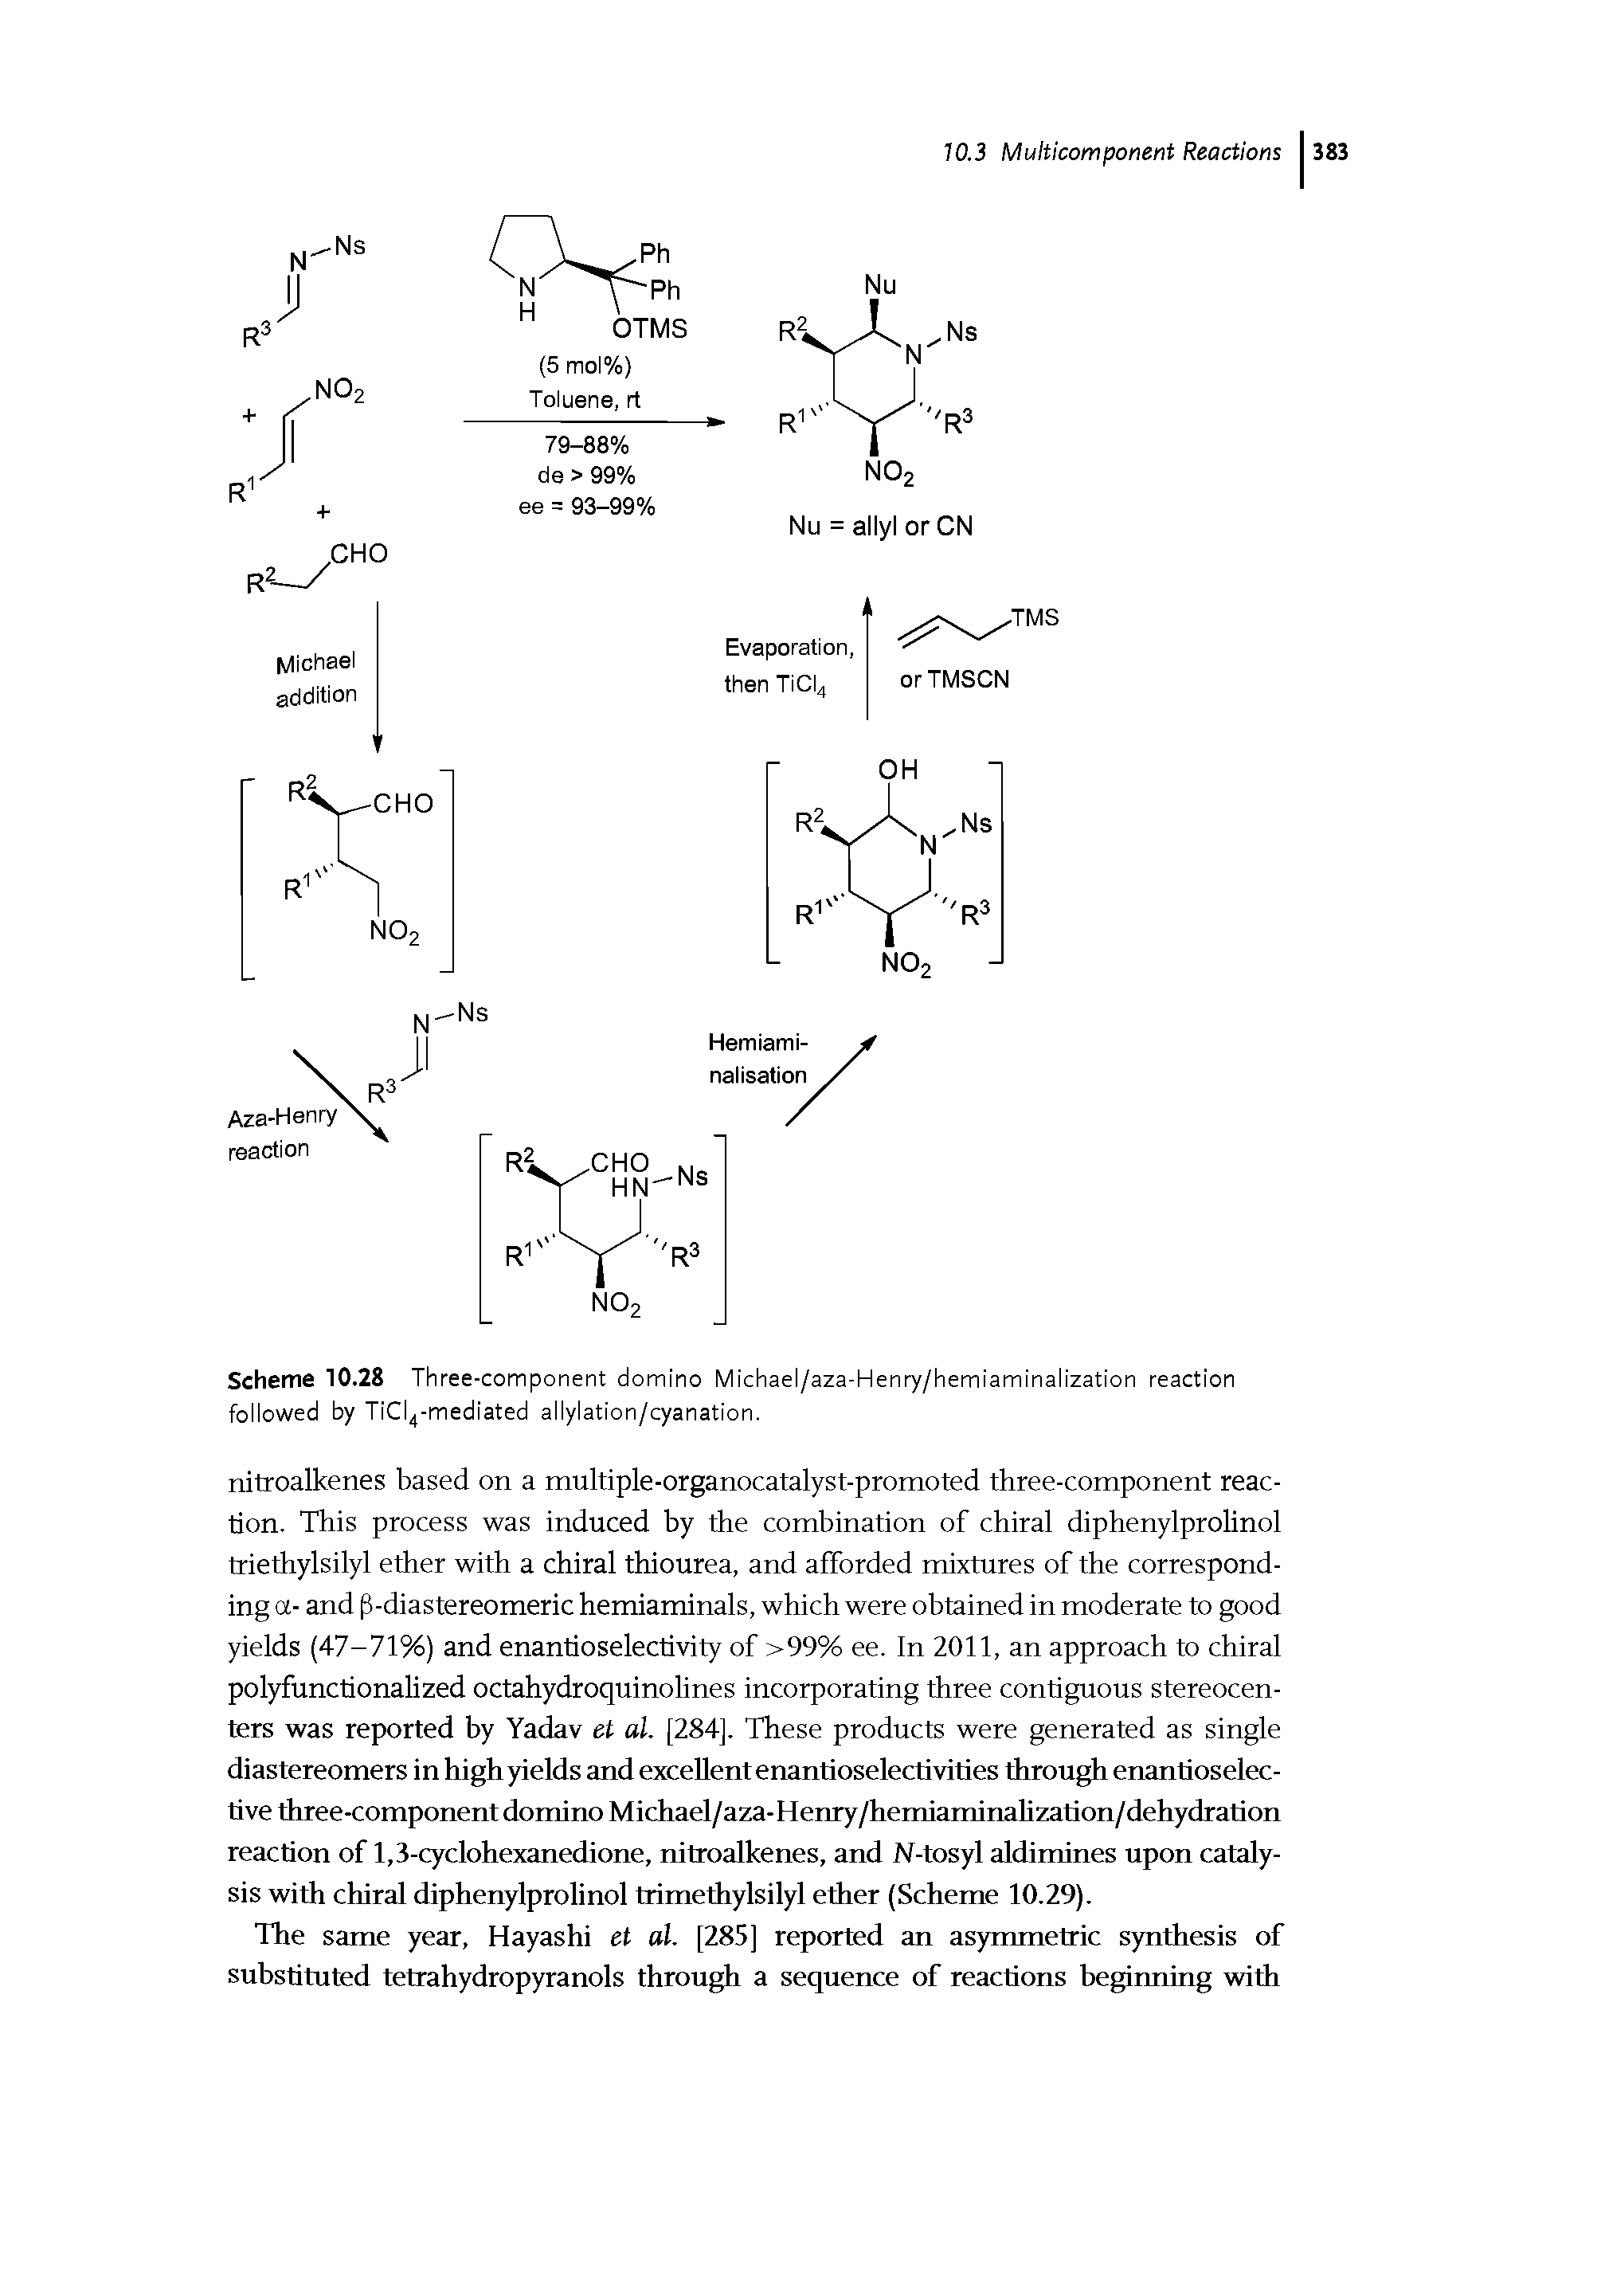 Scheme 10.28 Three-component domino Michael/aza-Henry/hemiaminalization reaction followed by TiCl4-mediated allylation/cyanation.